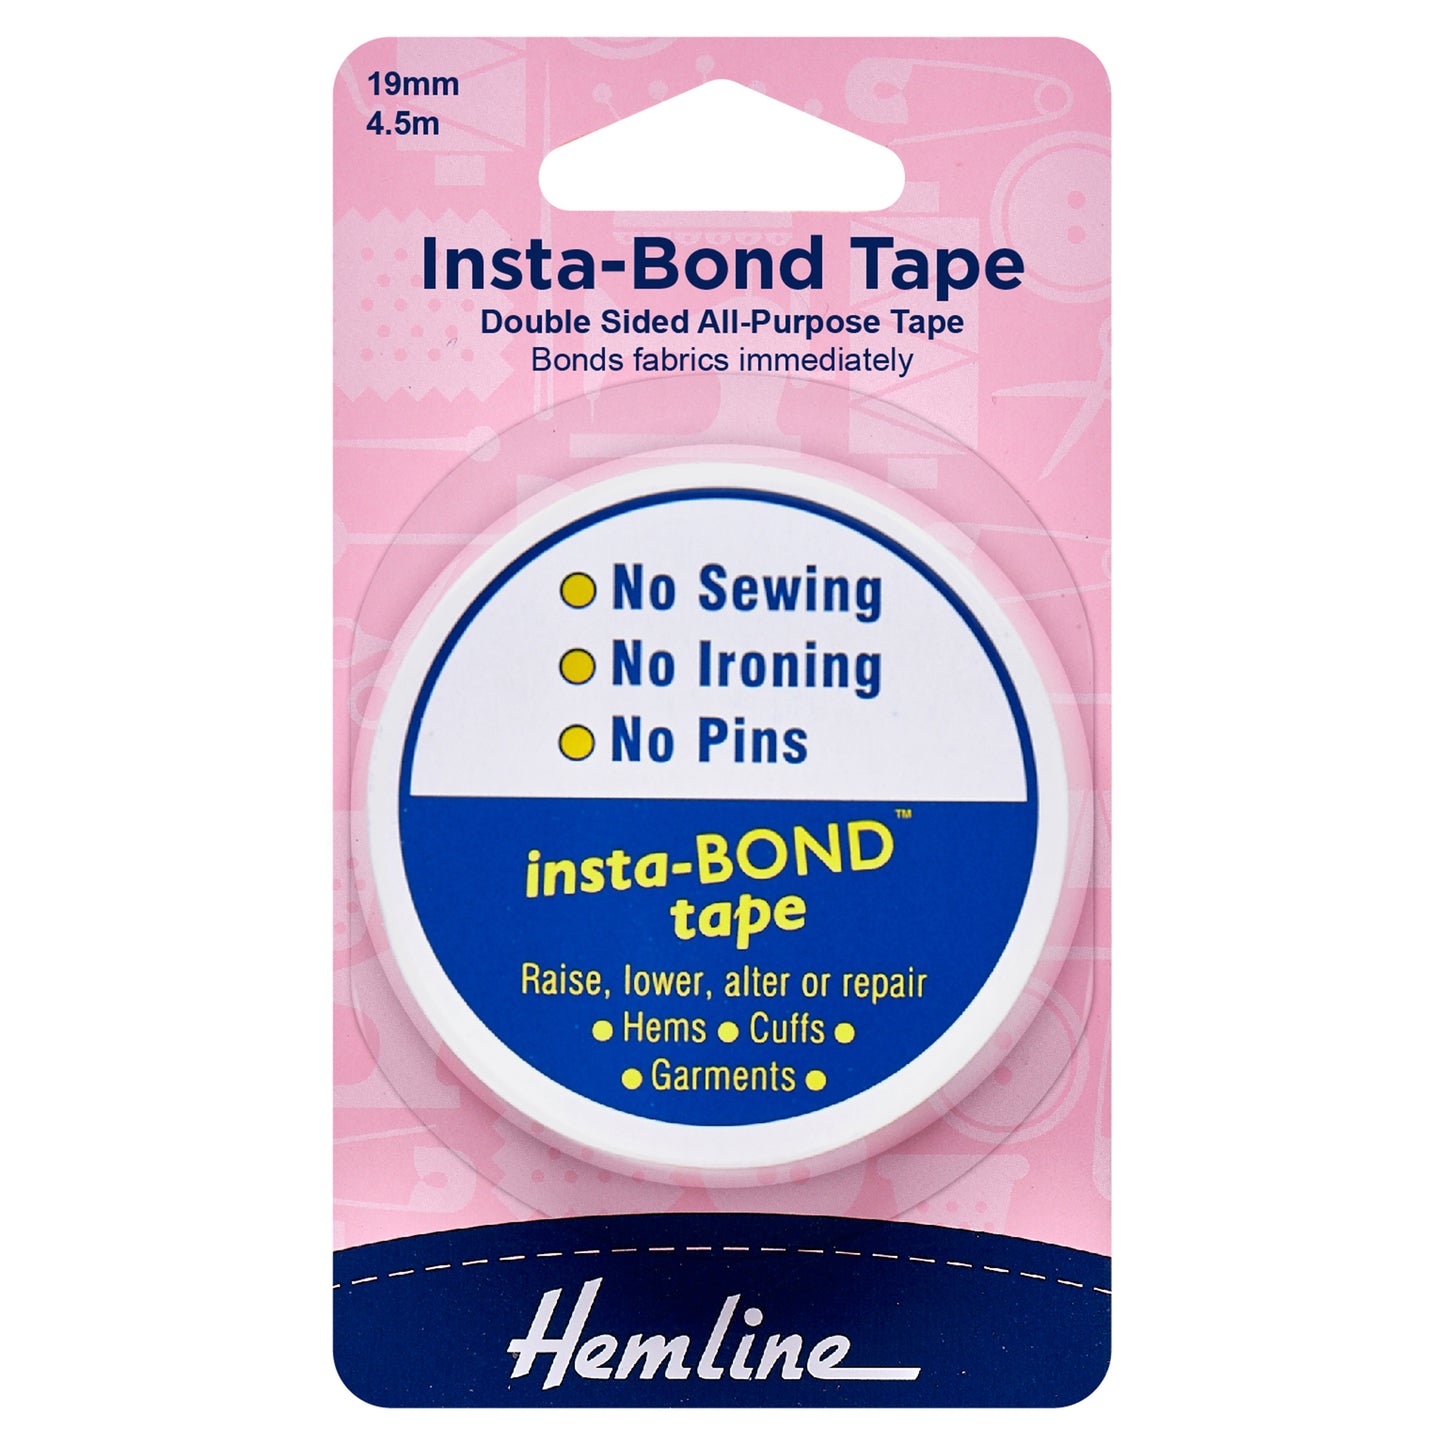 Insta-Bond Tape (Double Sided Tape): 4.5m x 19mm - Hemline